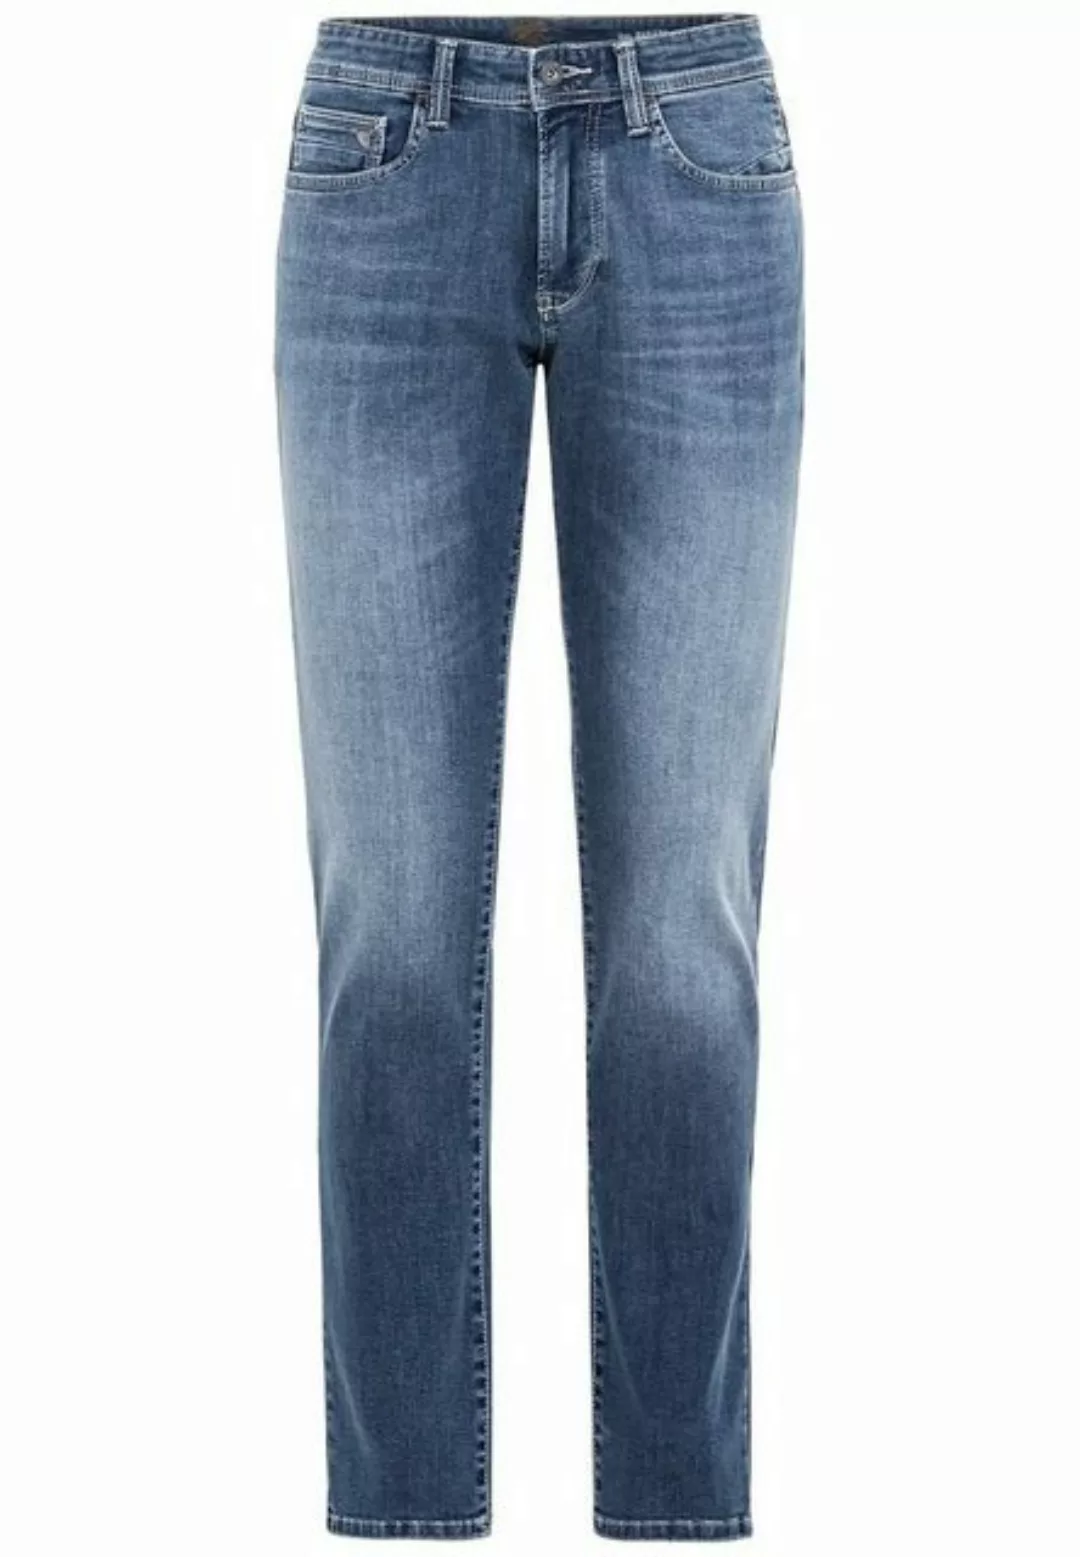 camel active 5-Pocket-Jeans Moderne Slim Fit Jeans aus Organic Cotton-Mix günstig online kaufen